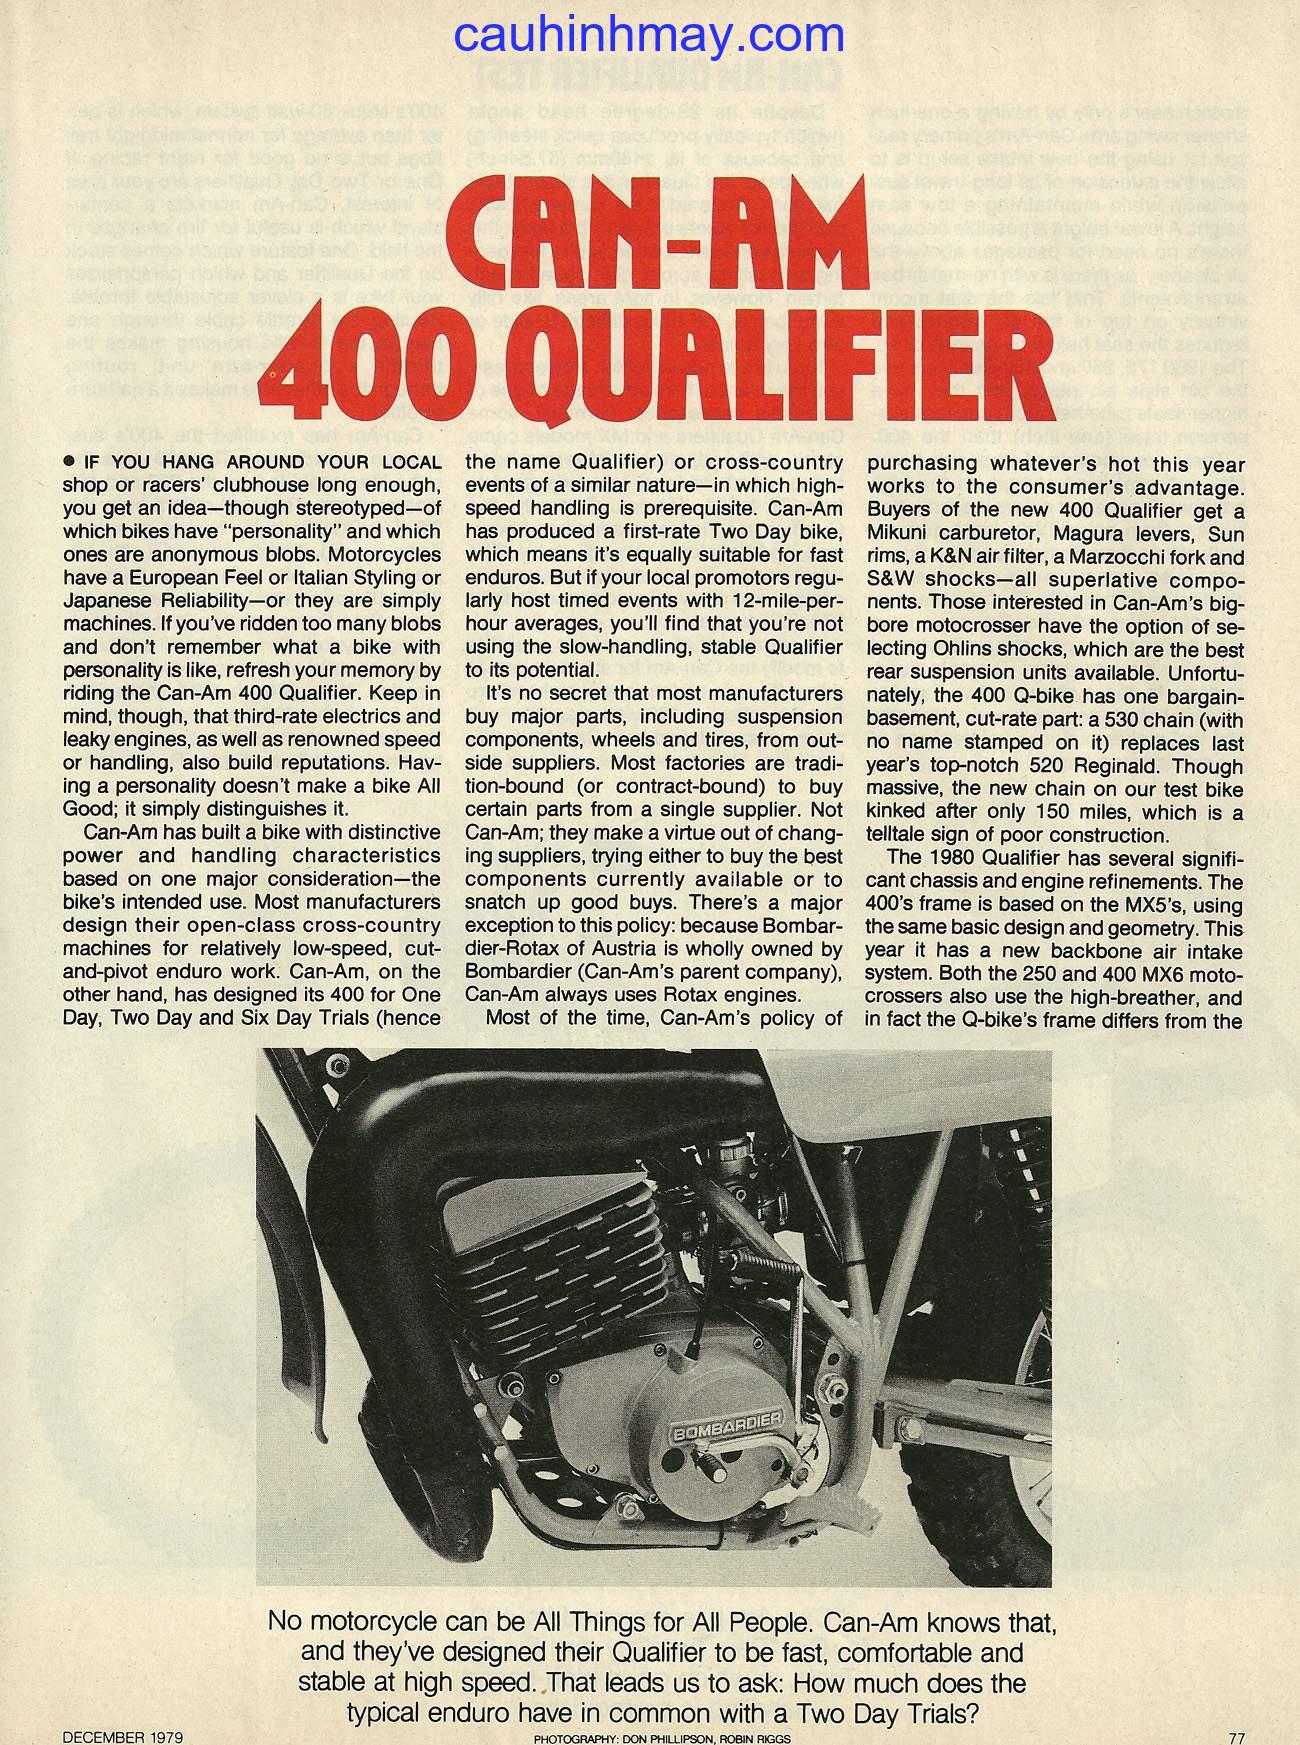 1980 CAN AM 400 QUALIFIER - cauhinhmay.com